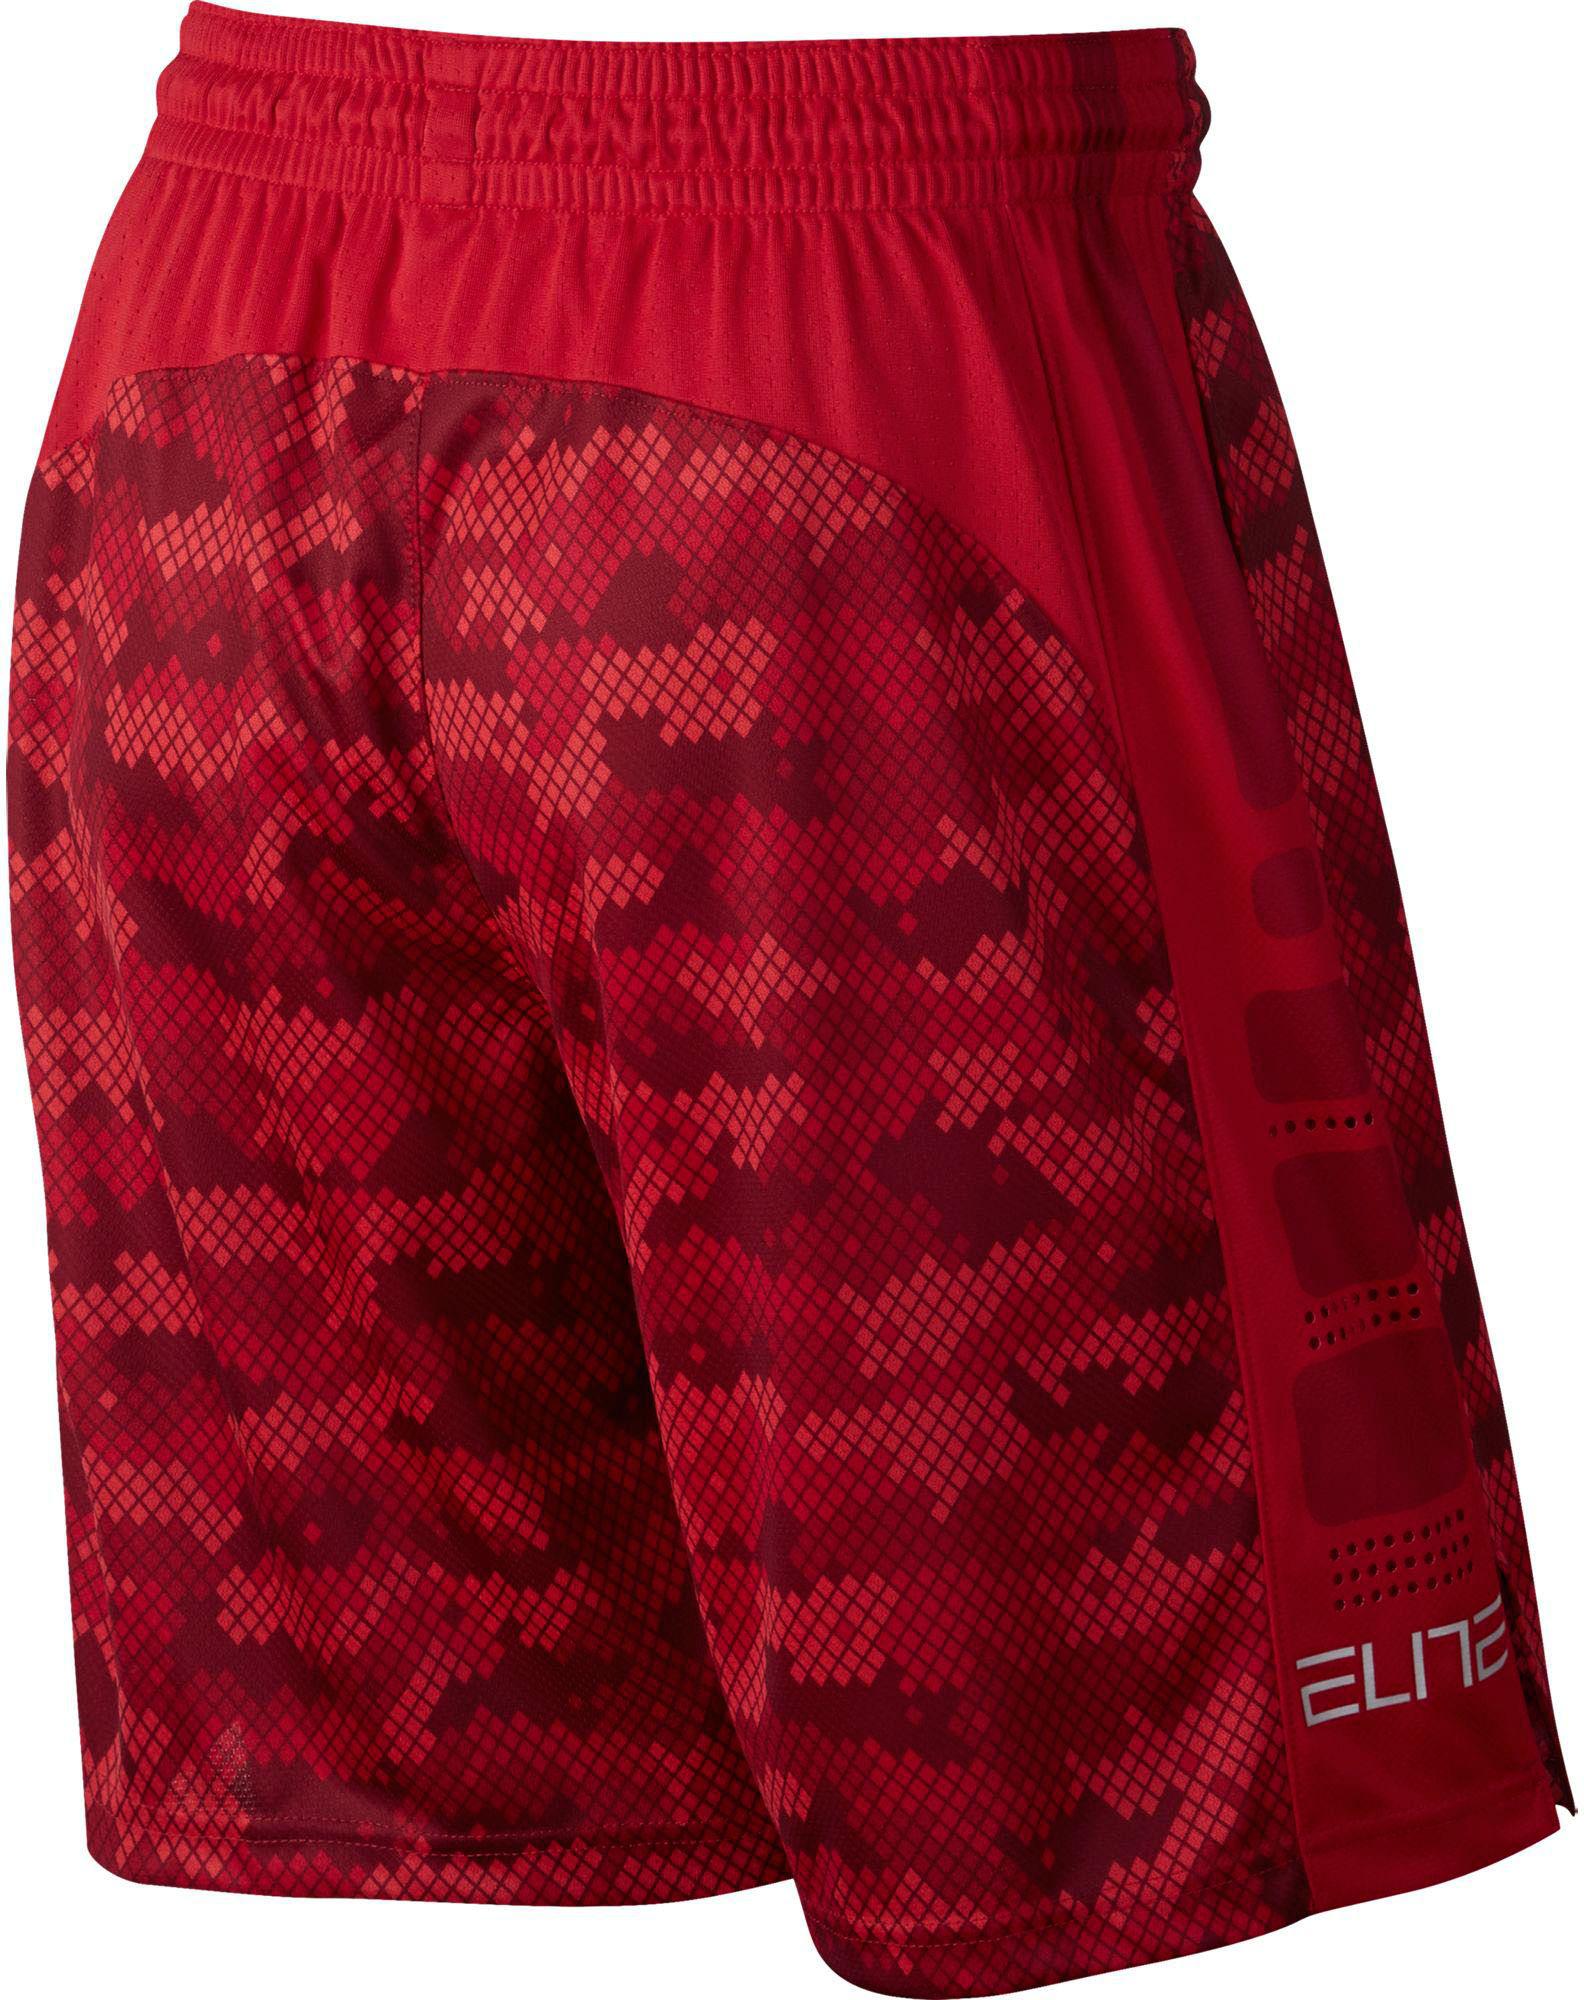 red nike elite shorts